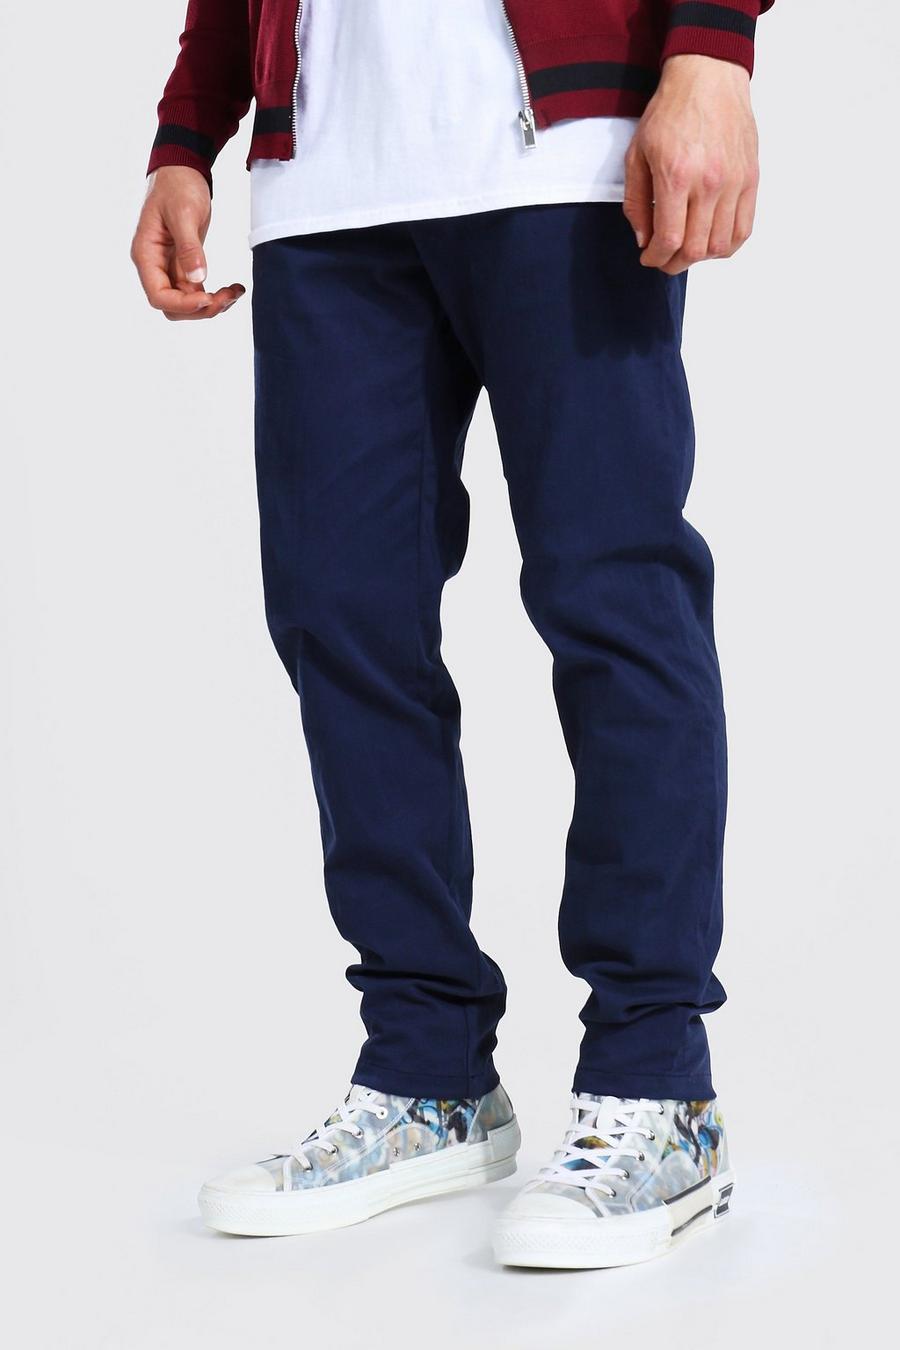 Pantaloni Chino Skinny Fit, Navy azul marino